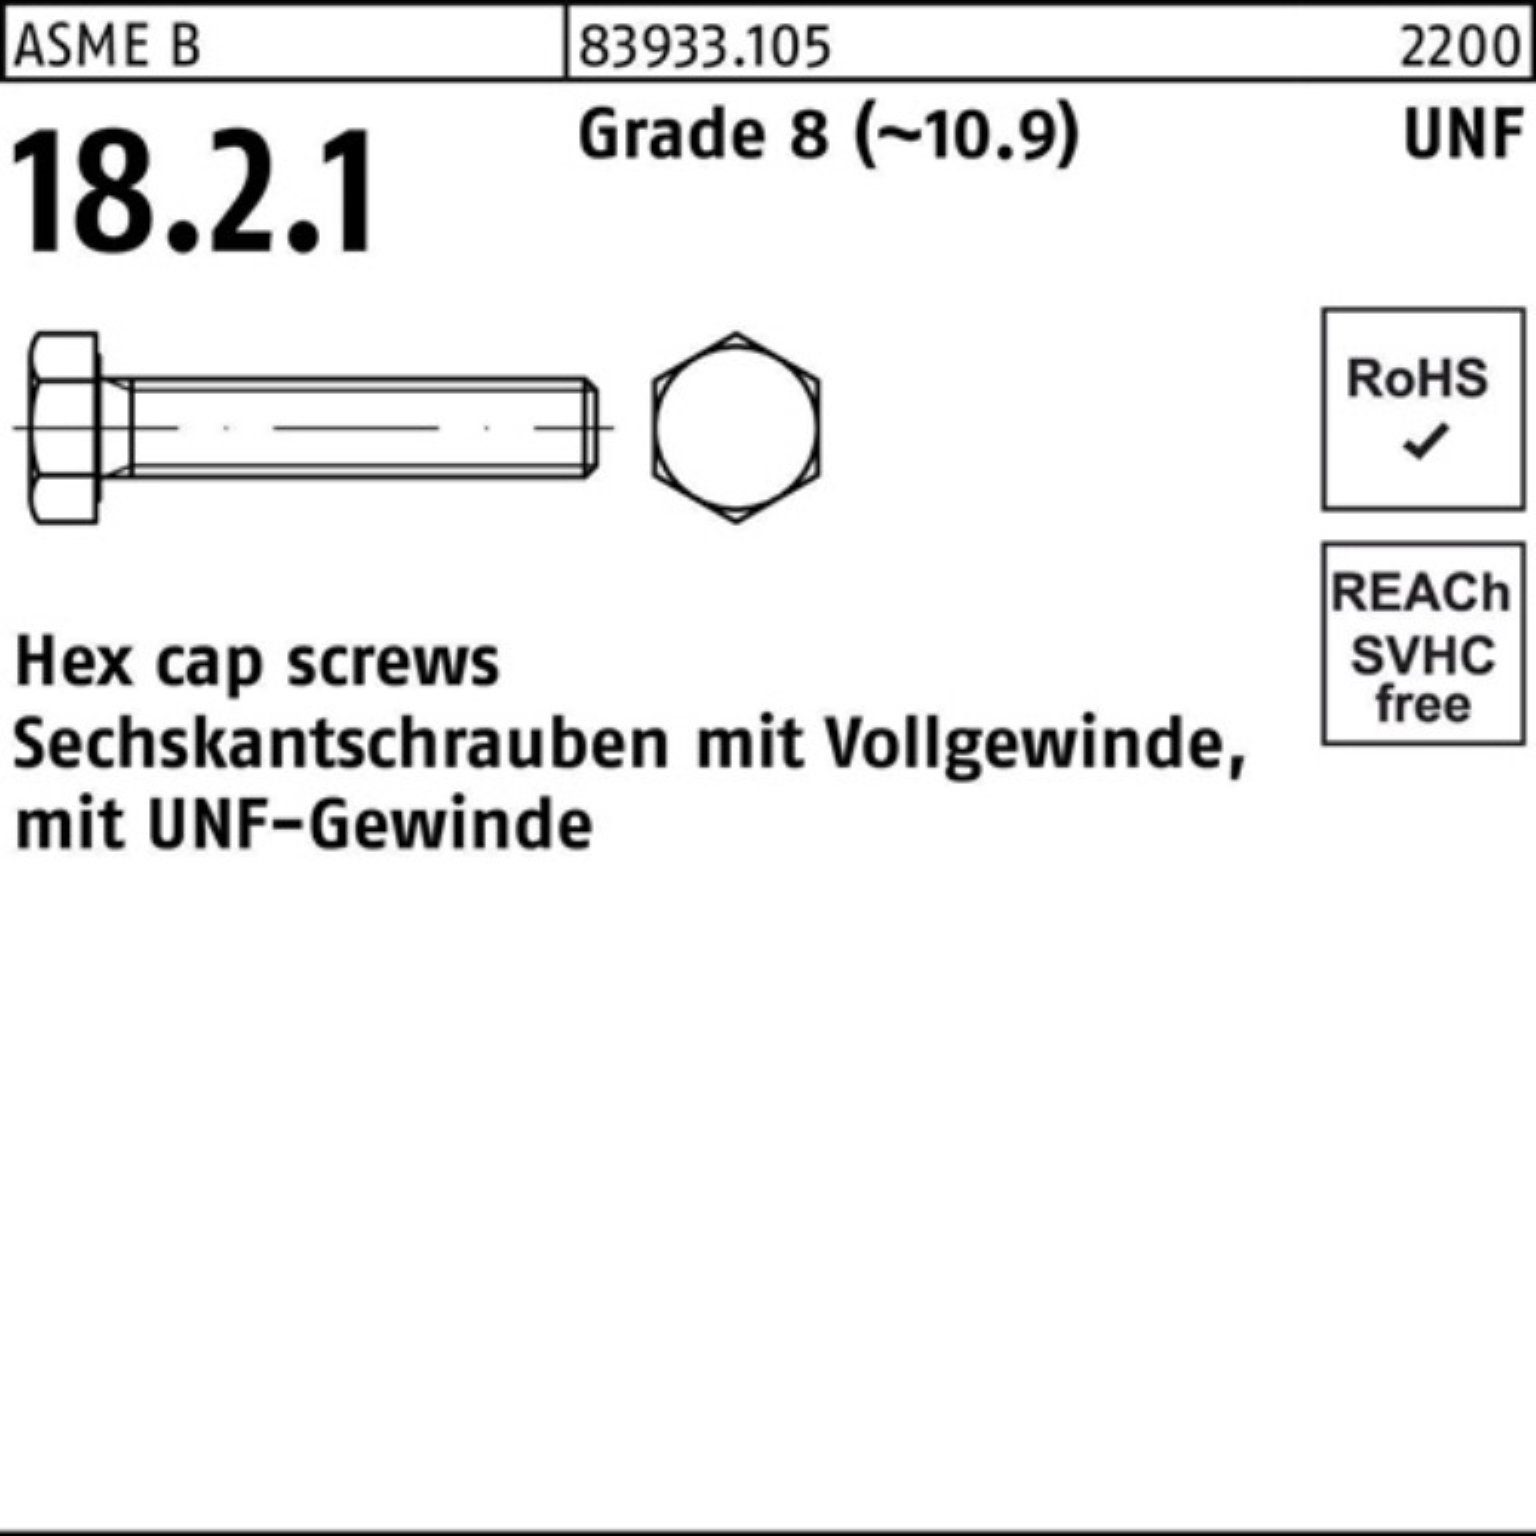 Reyher Sechskantschraube 100er Pack Sechskantschraube R 83933 UNF-Gewinde VG 1/4x 5/8 Grade 8